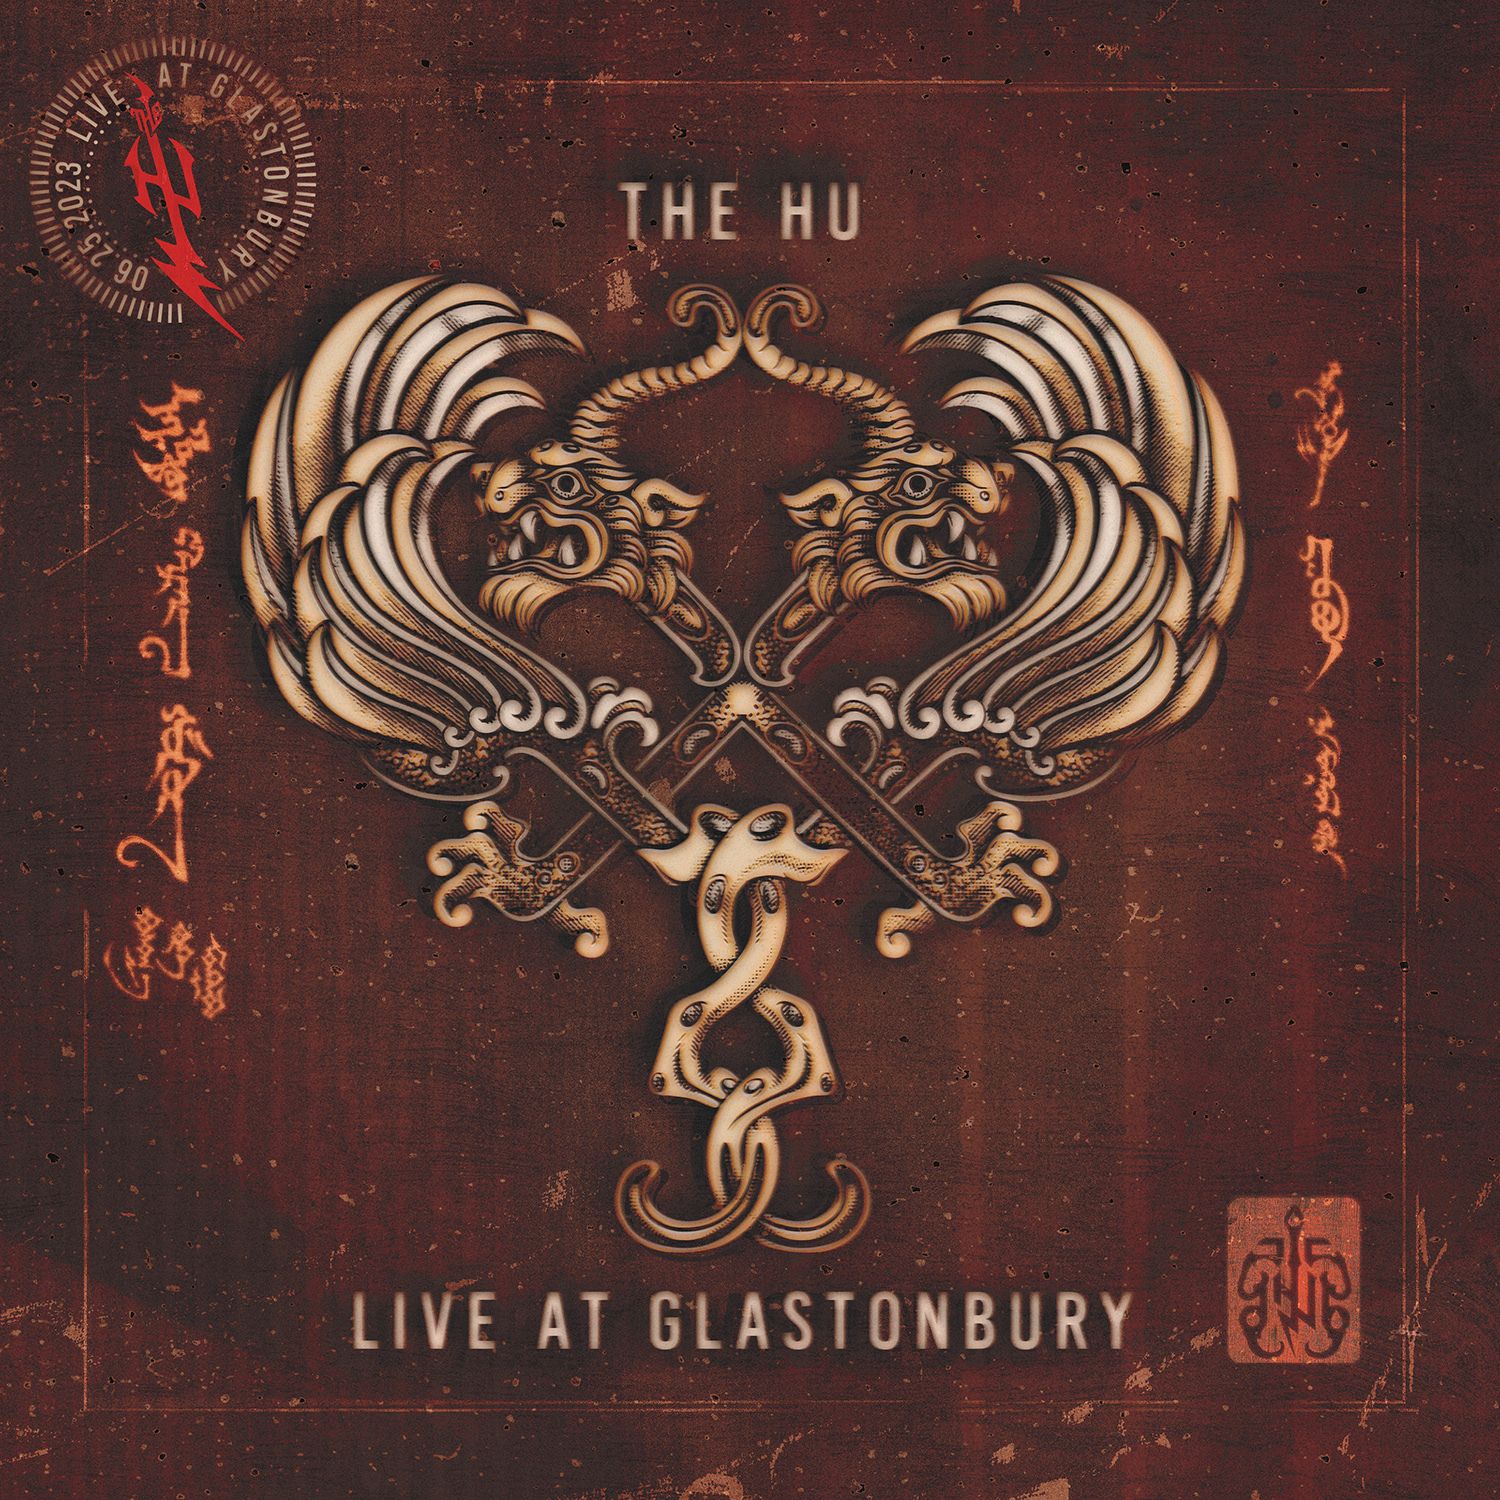 The Hu - "Live At Glastonbury"